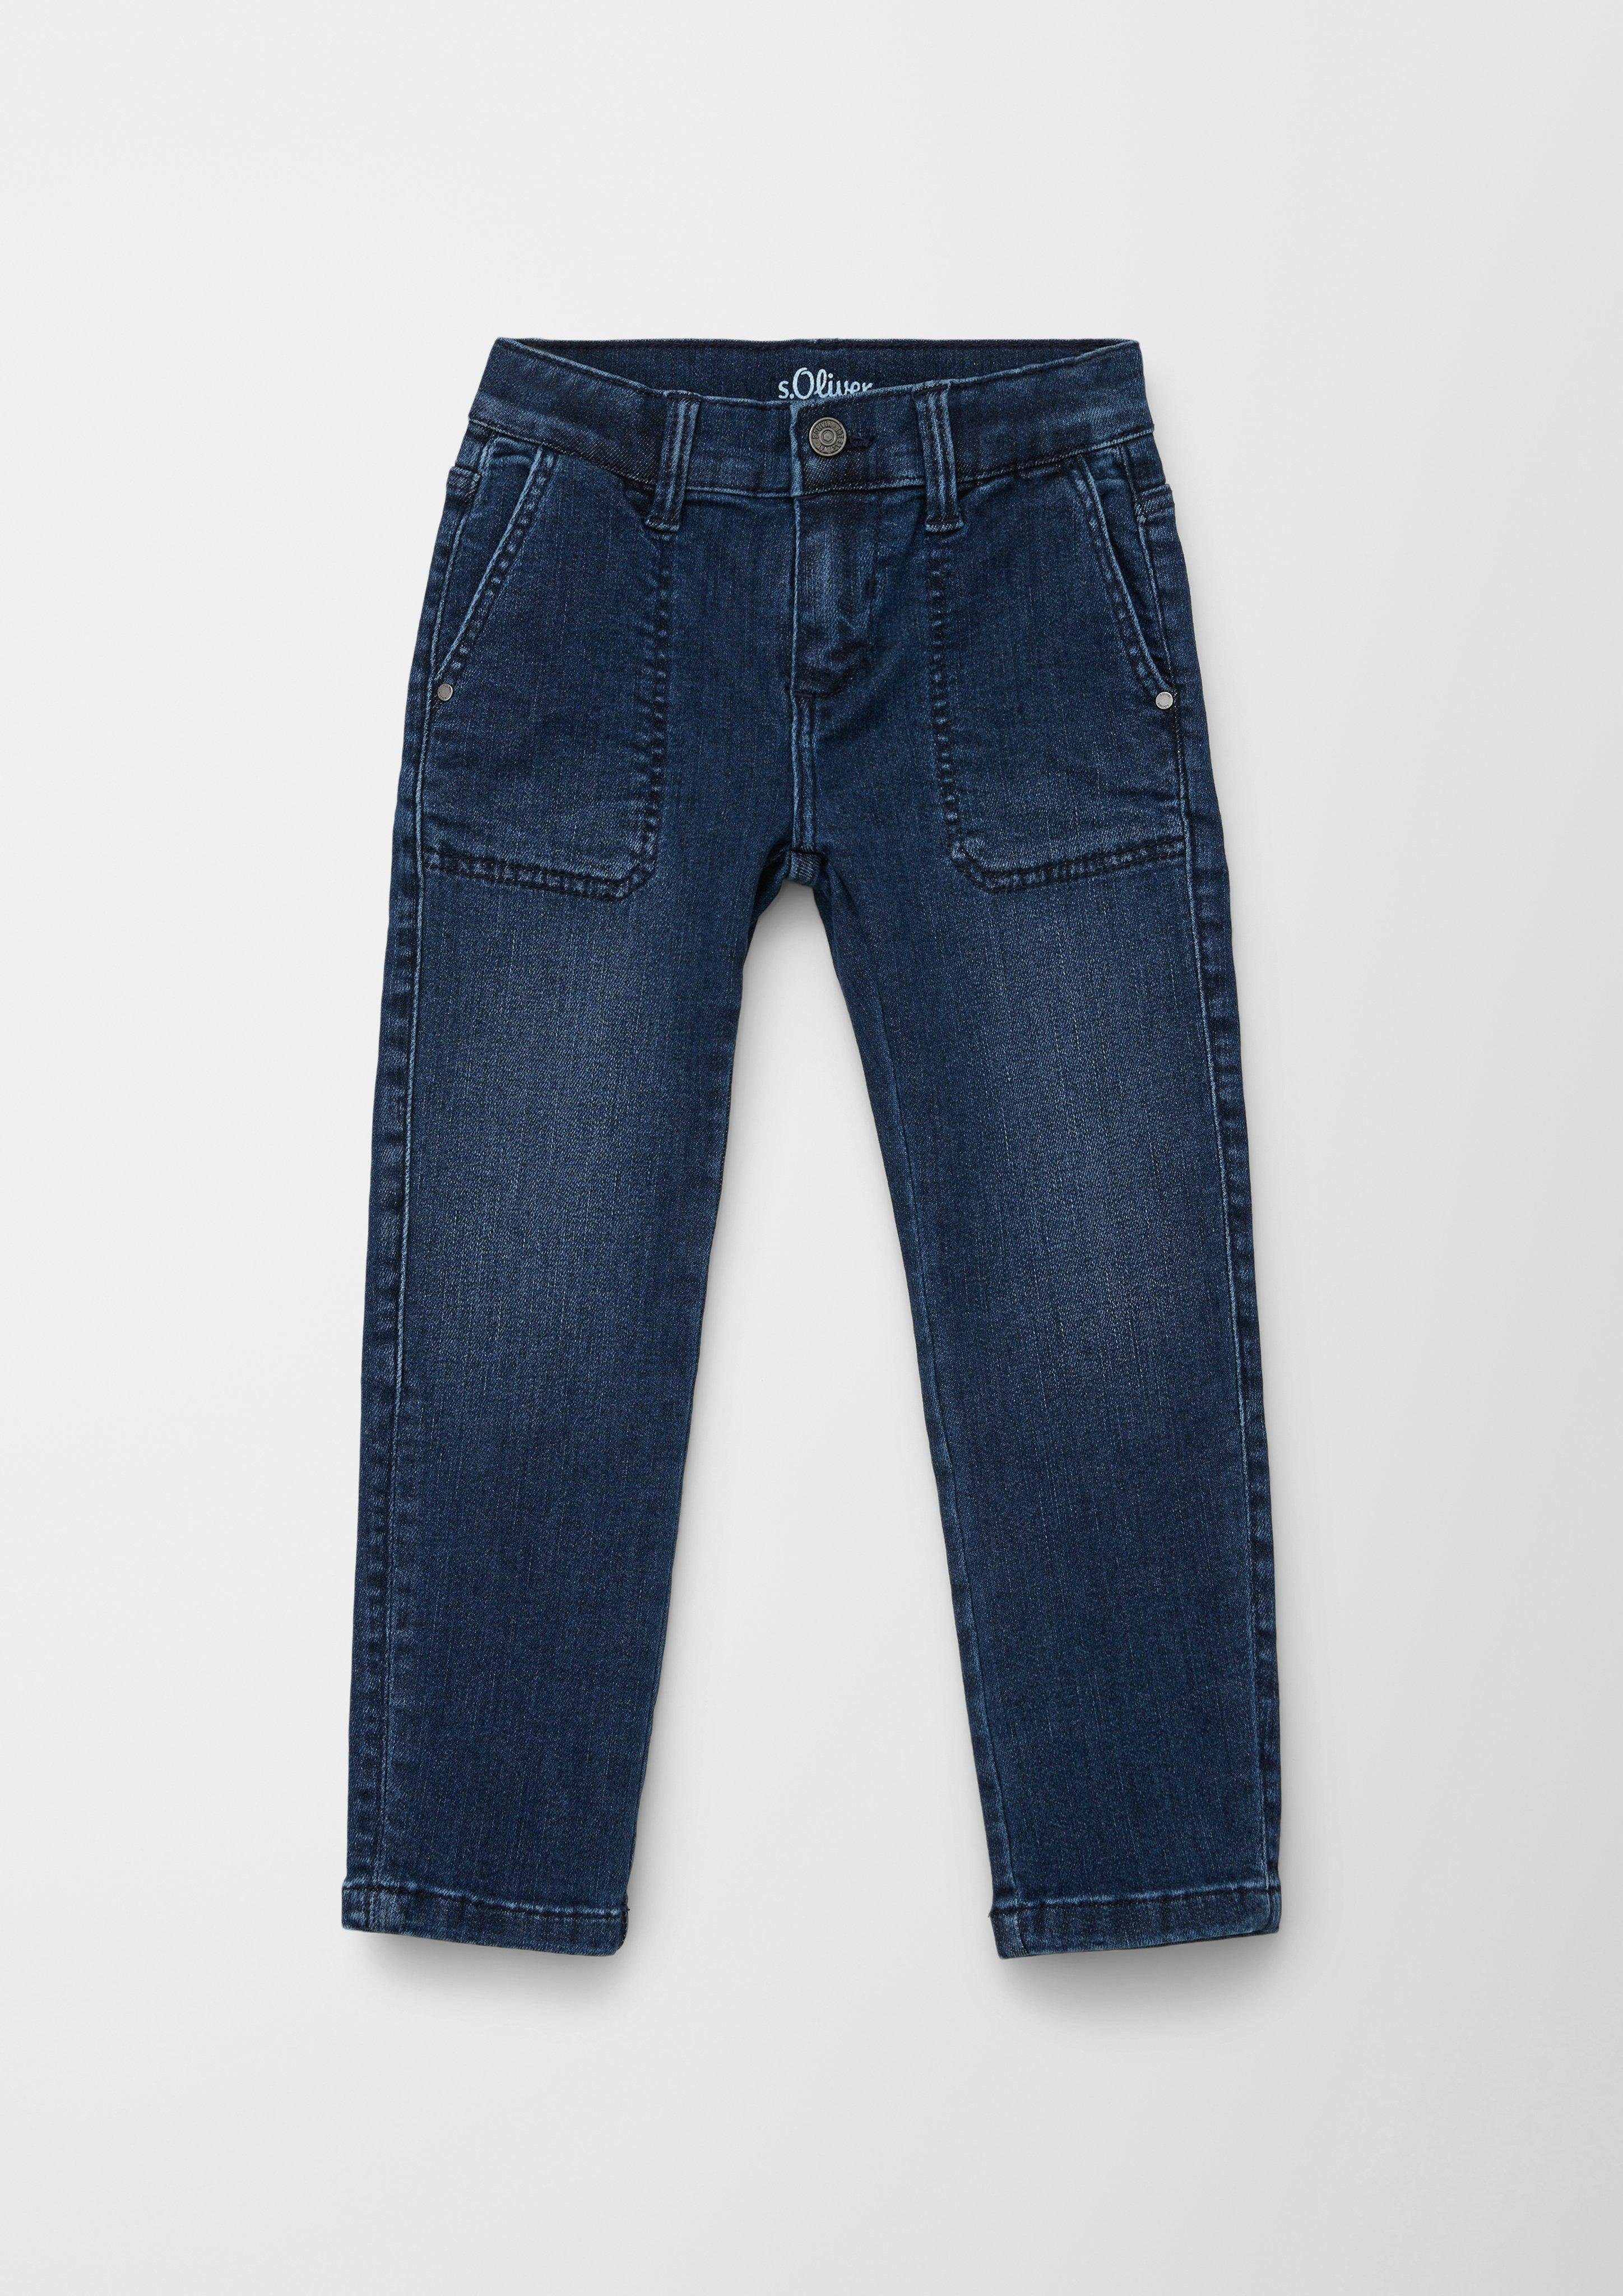 Pelle: Jeans mit verstellbarem Bund 5-Pocket-Jeans Waschung s.Oliver